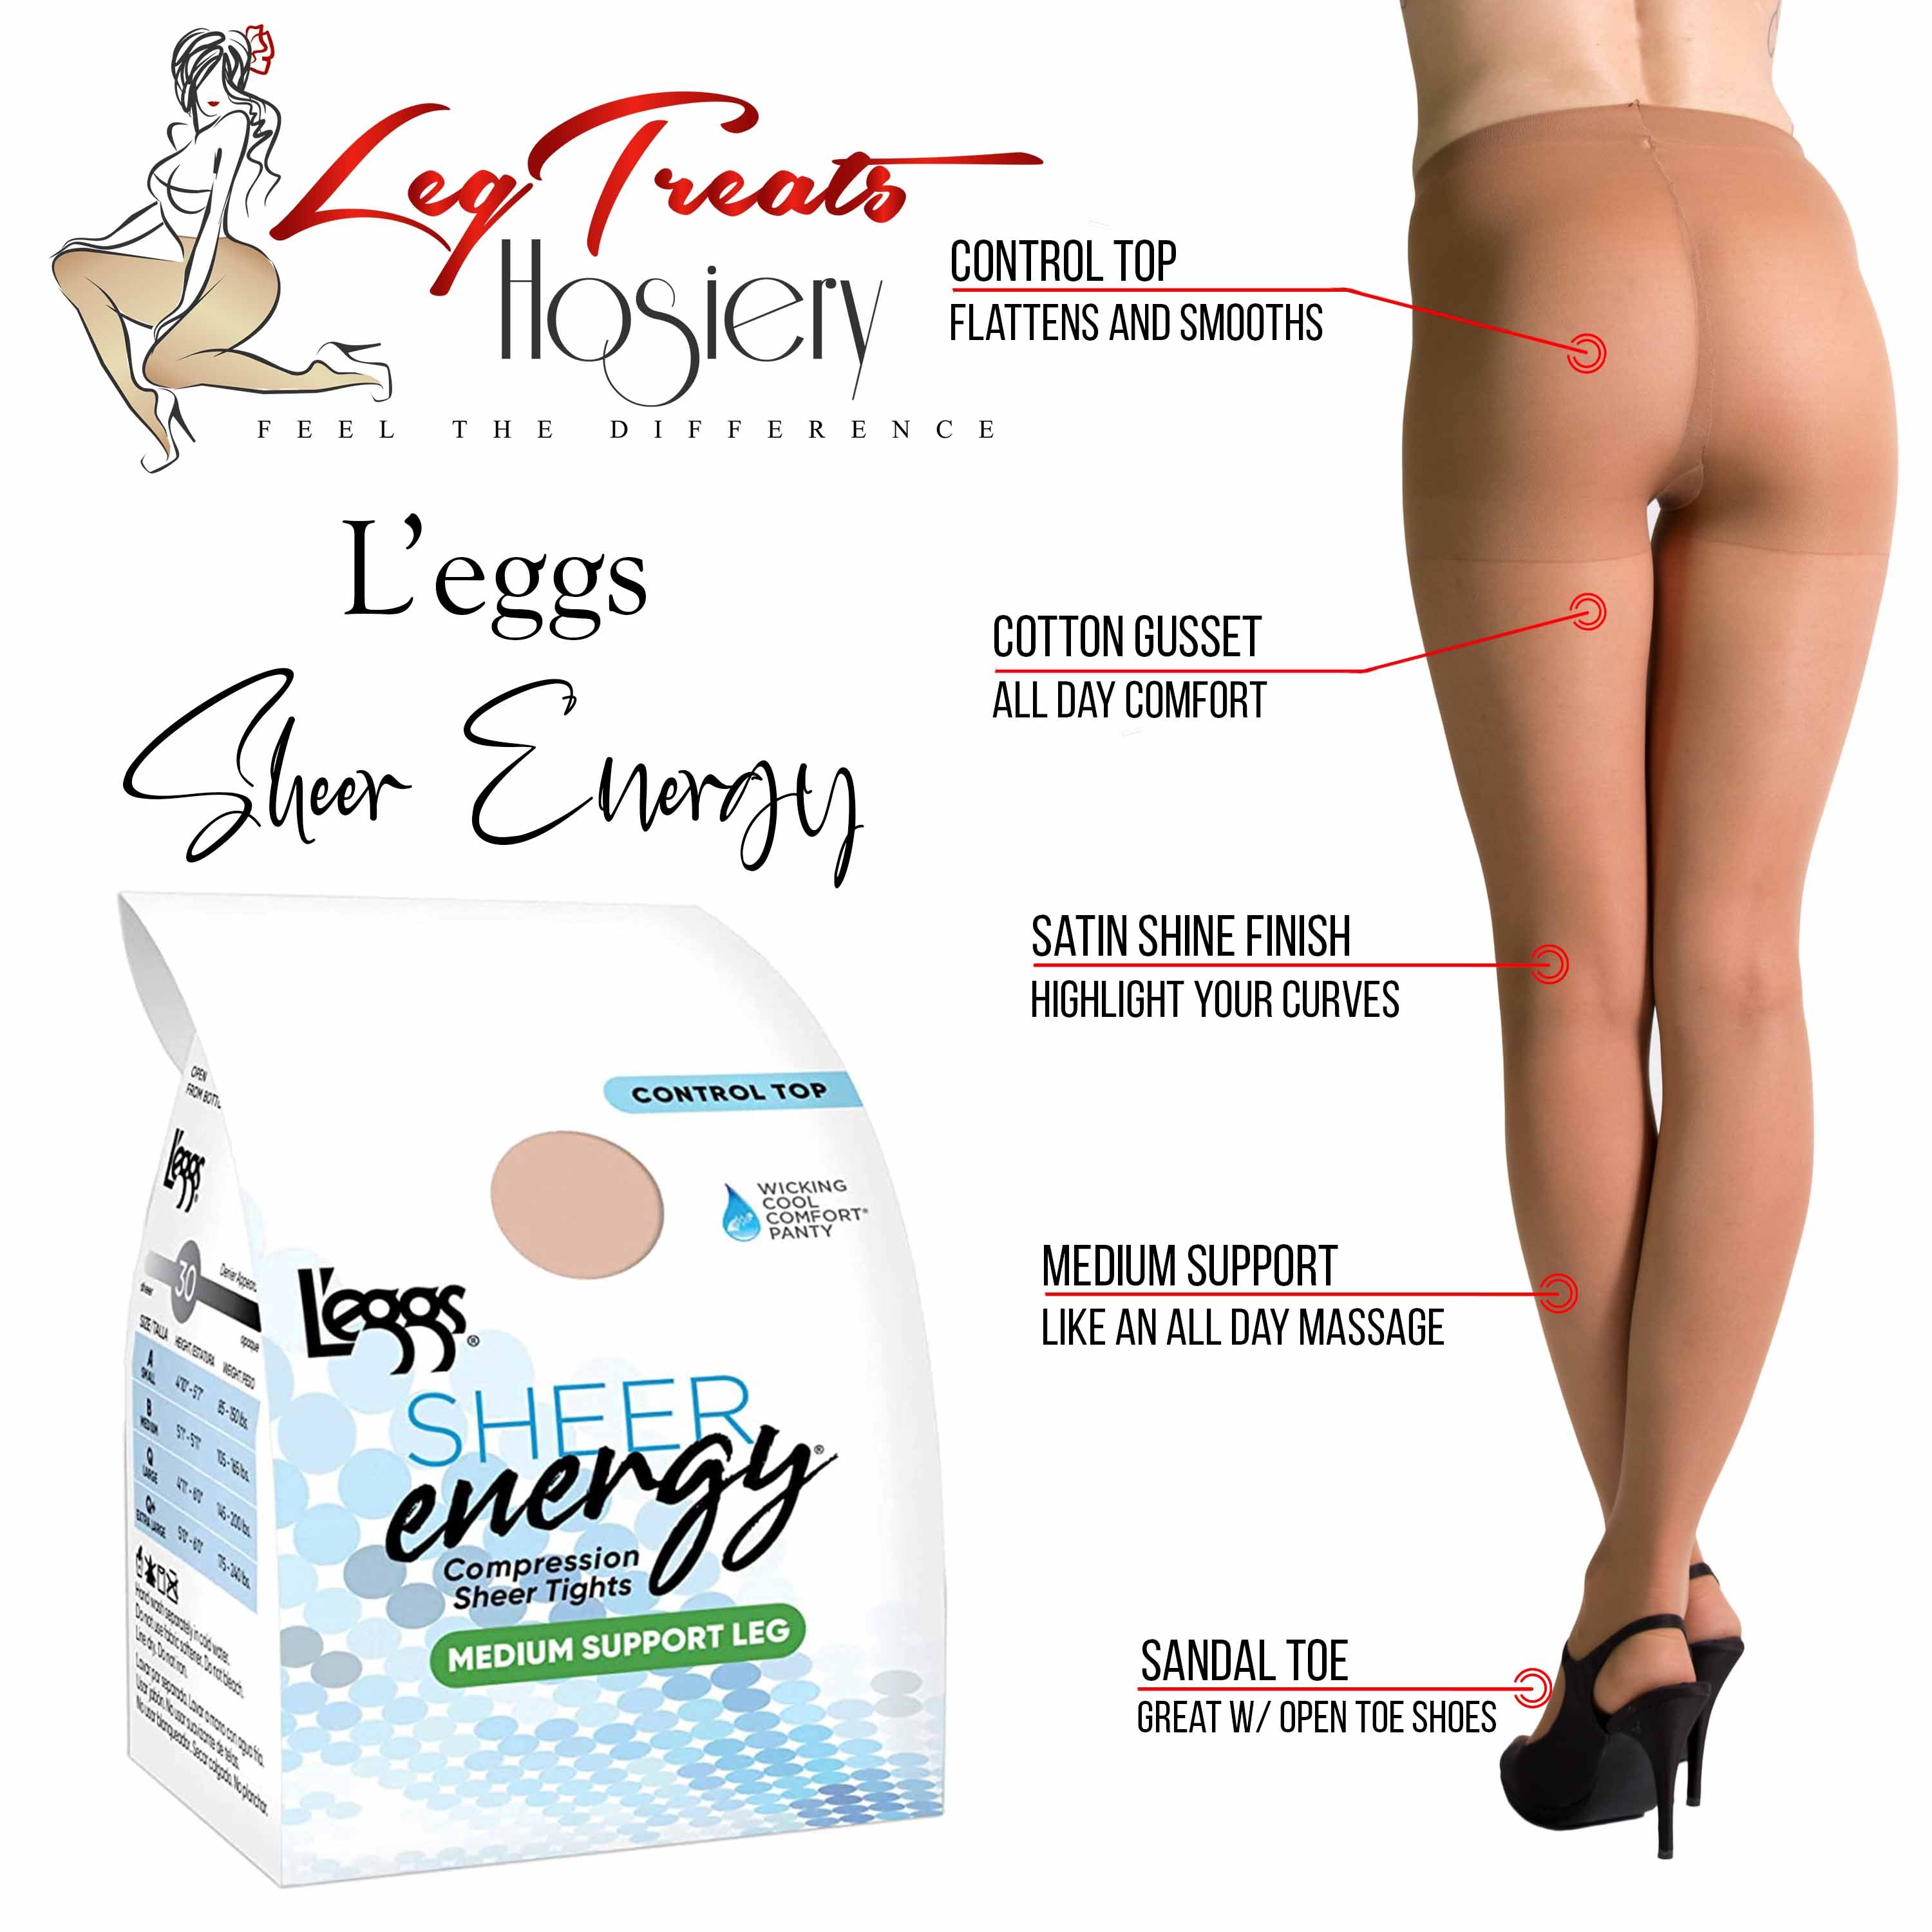 Leggs Sheer Energy Off white Control Top Pantyhose Size B - beyond exchange